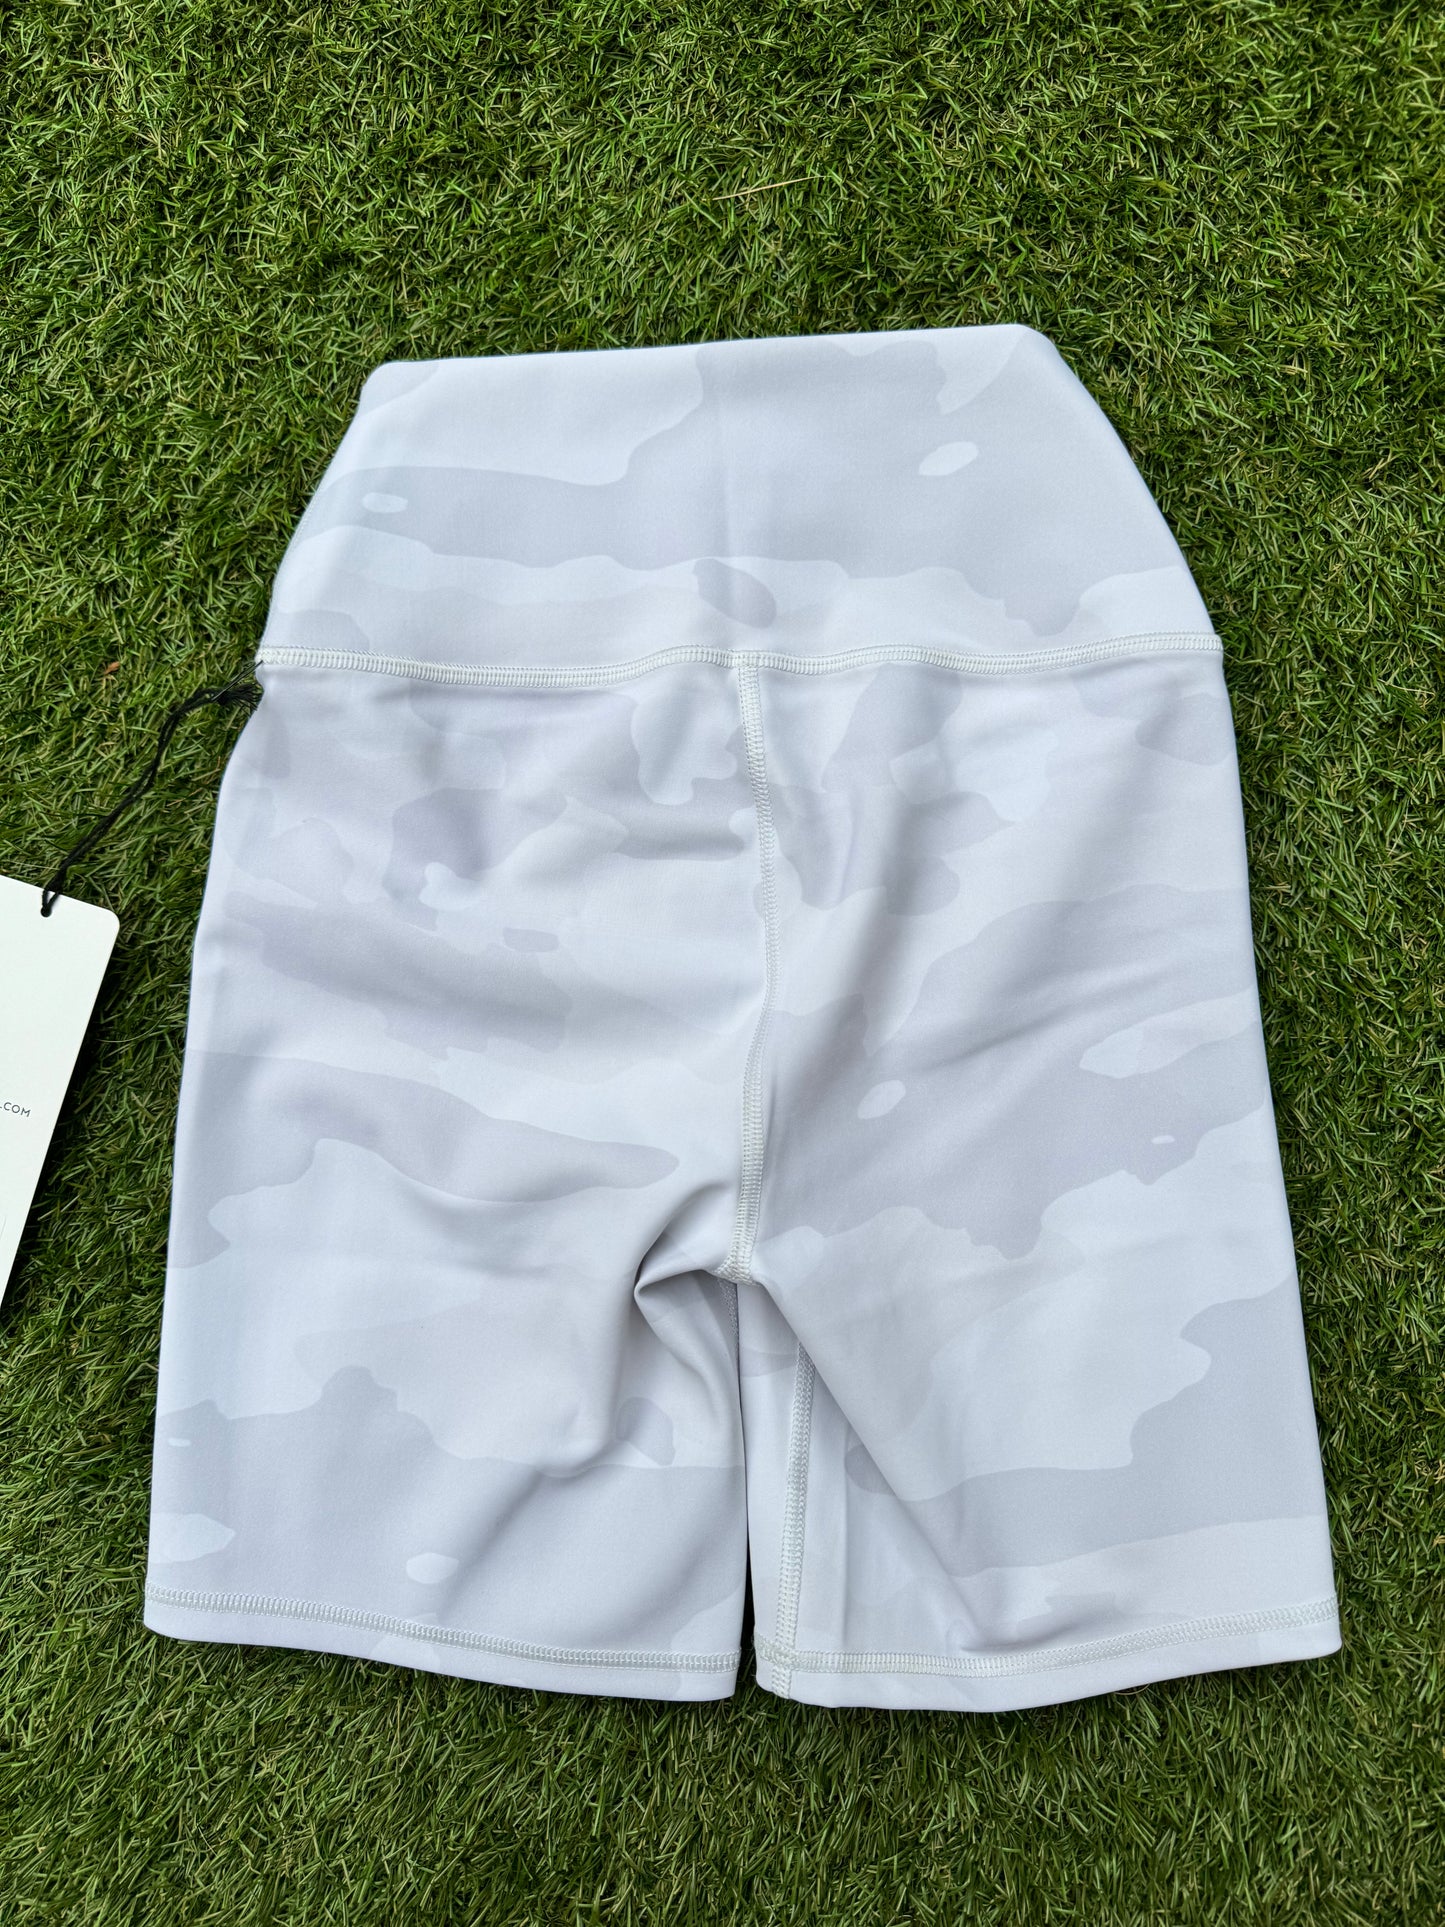 Alo Yoga 7" High-Waist Vapor Short White Camo Camouflage Stretch Bike Shorts